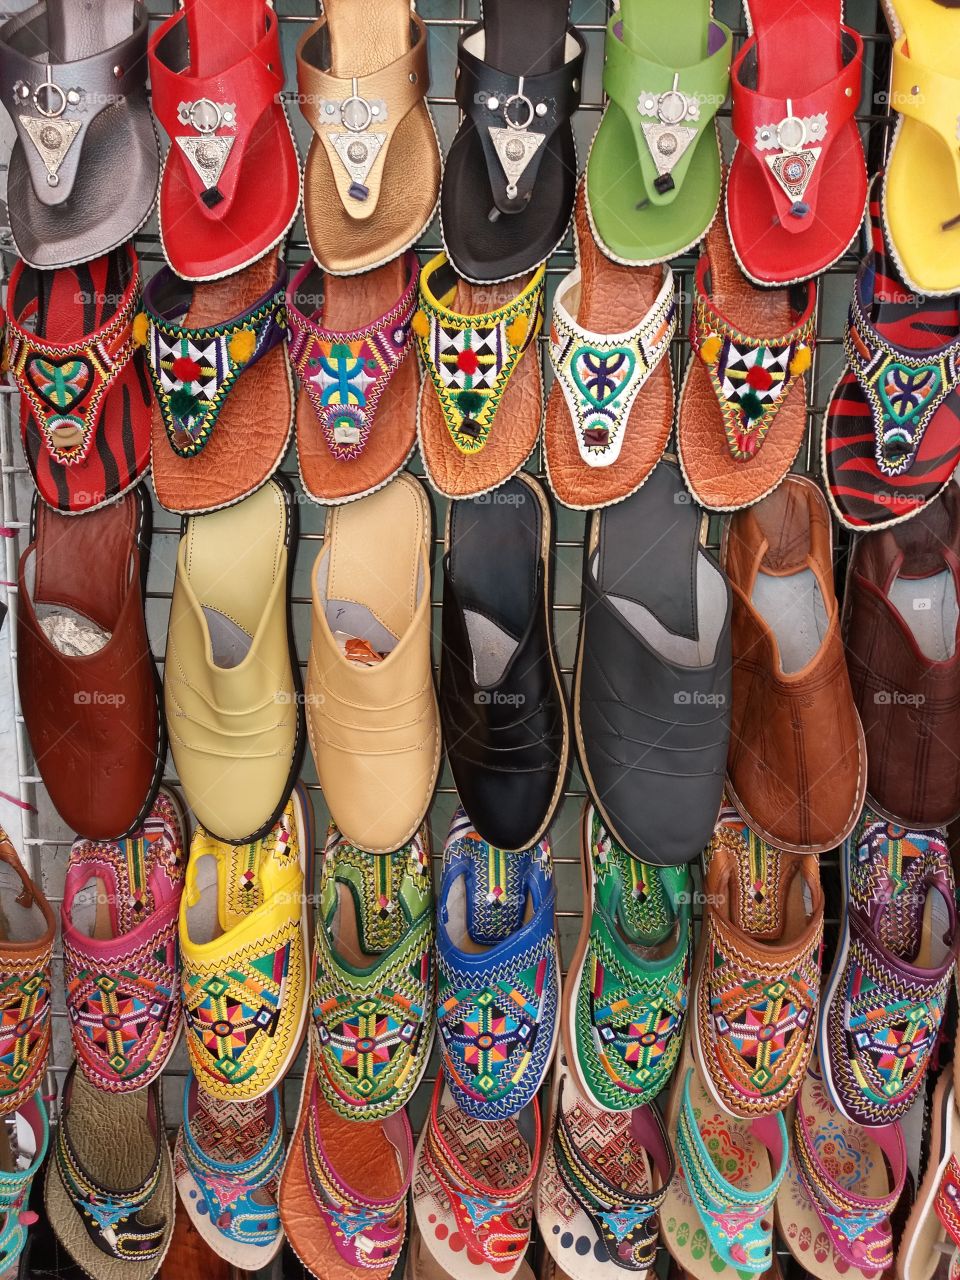 the shoes#Amazigh culture#color#market#Morocco